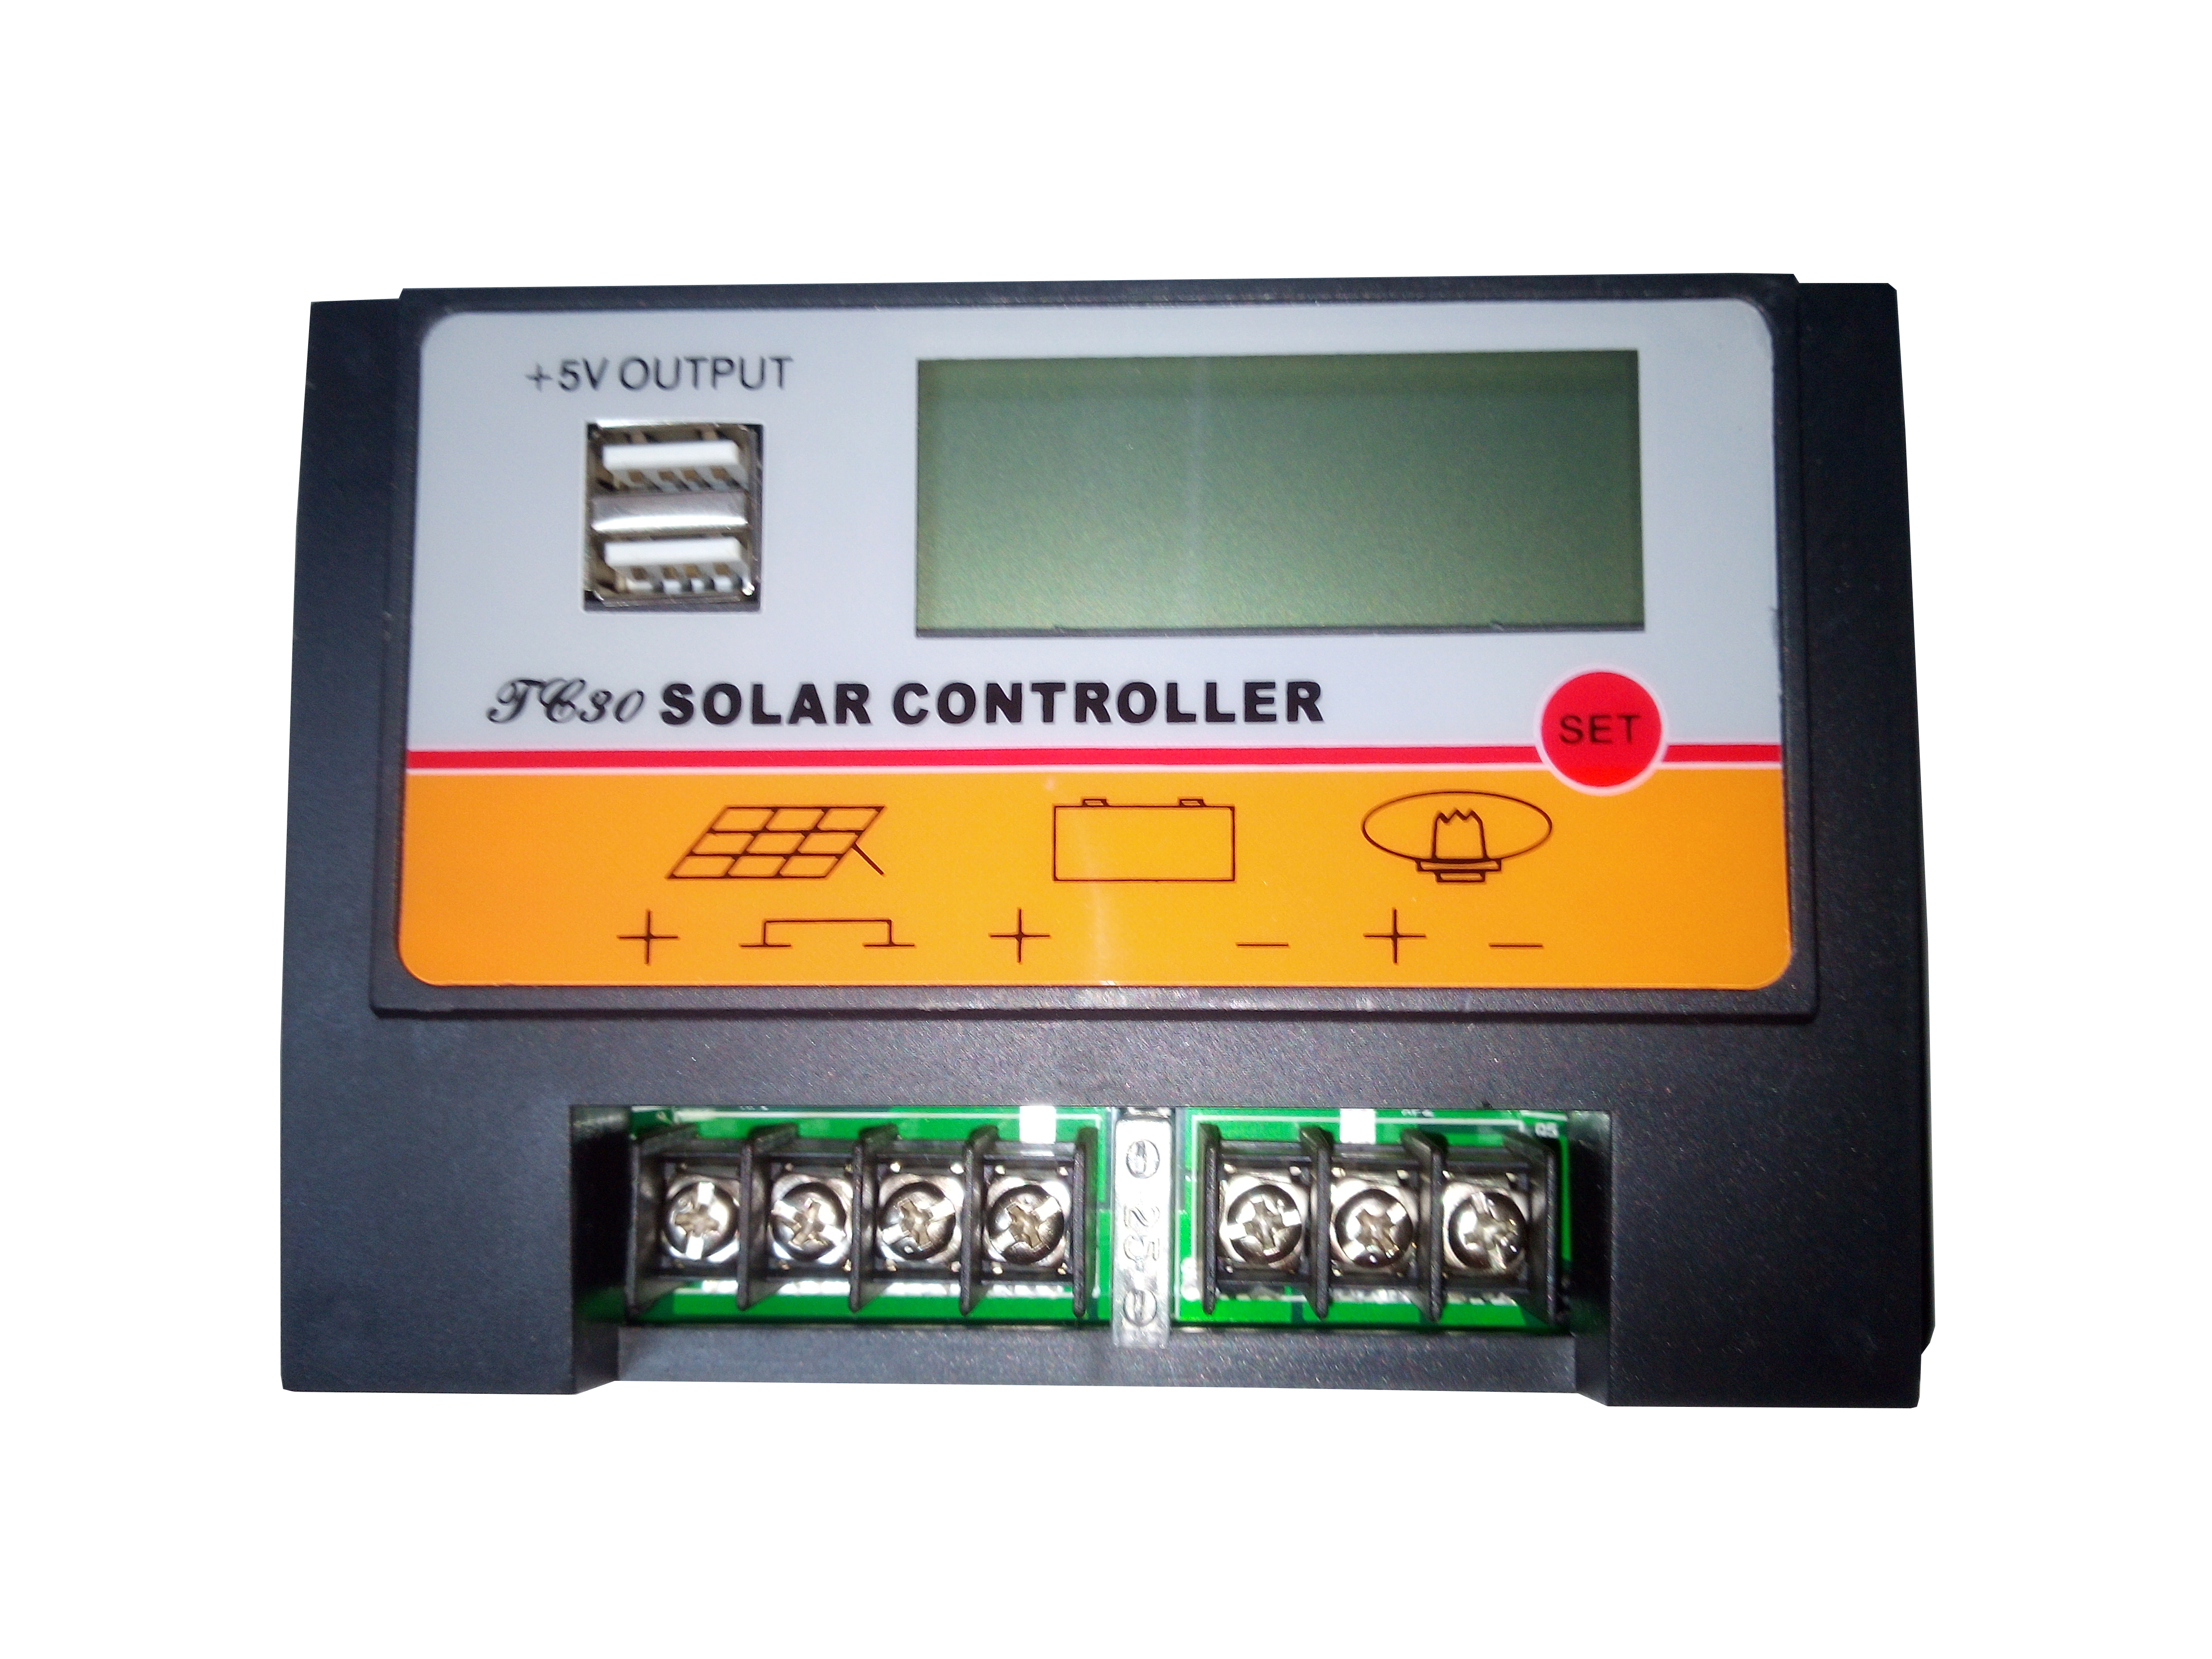 Klausstech Controller solar jarrett incarcare baterie , 20 a , display grafic lcd , tensiune de incarcare 13,8 v/24,6 v , tensiunea joasa de protectie 10,7 v/21,4 v